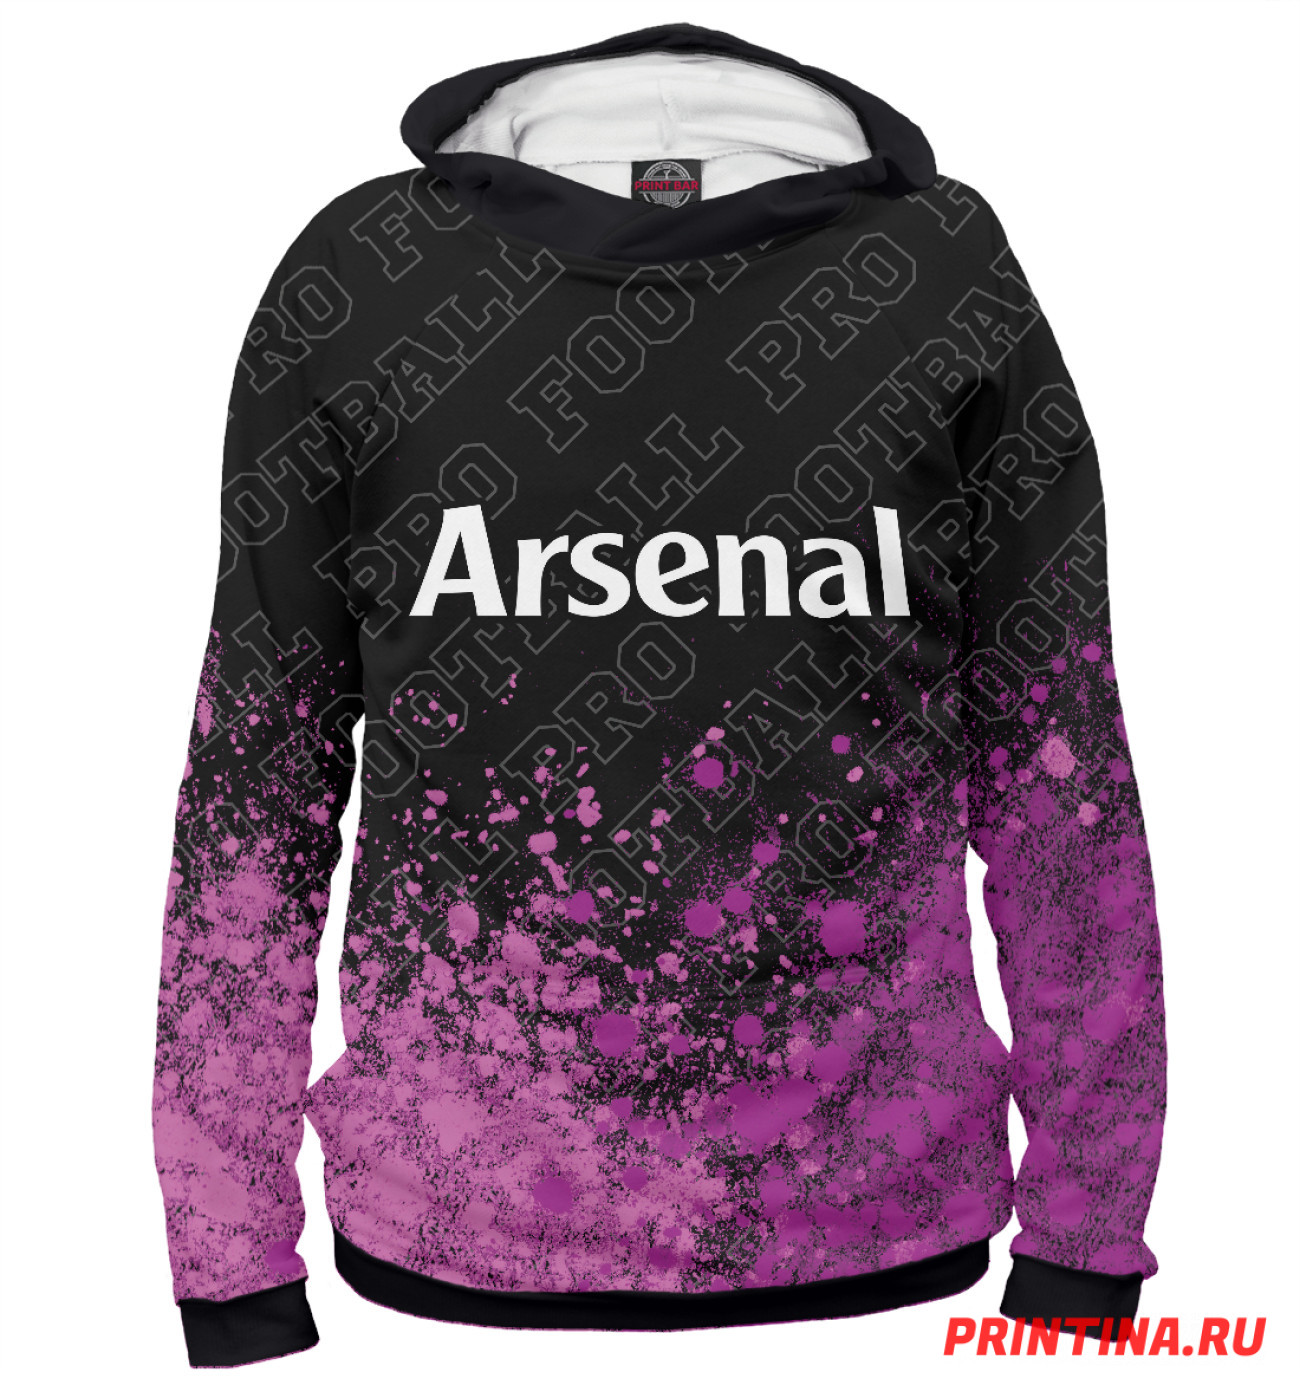 Женское Худи Arsenal Pro Football (color splash), артикул: ARS-755668-hud-1